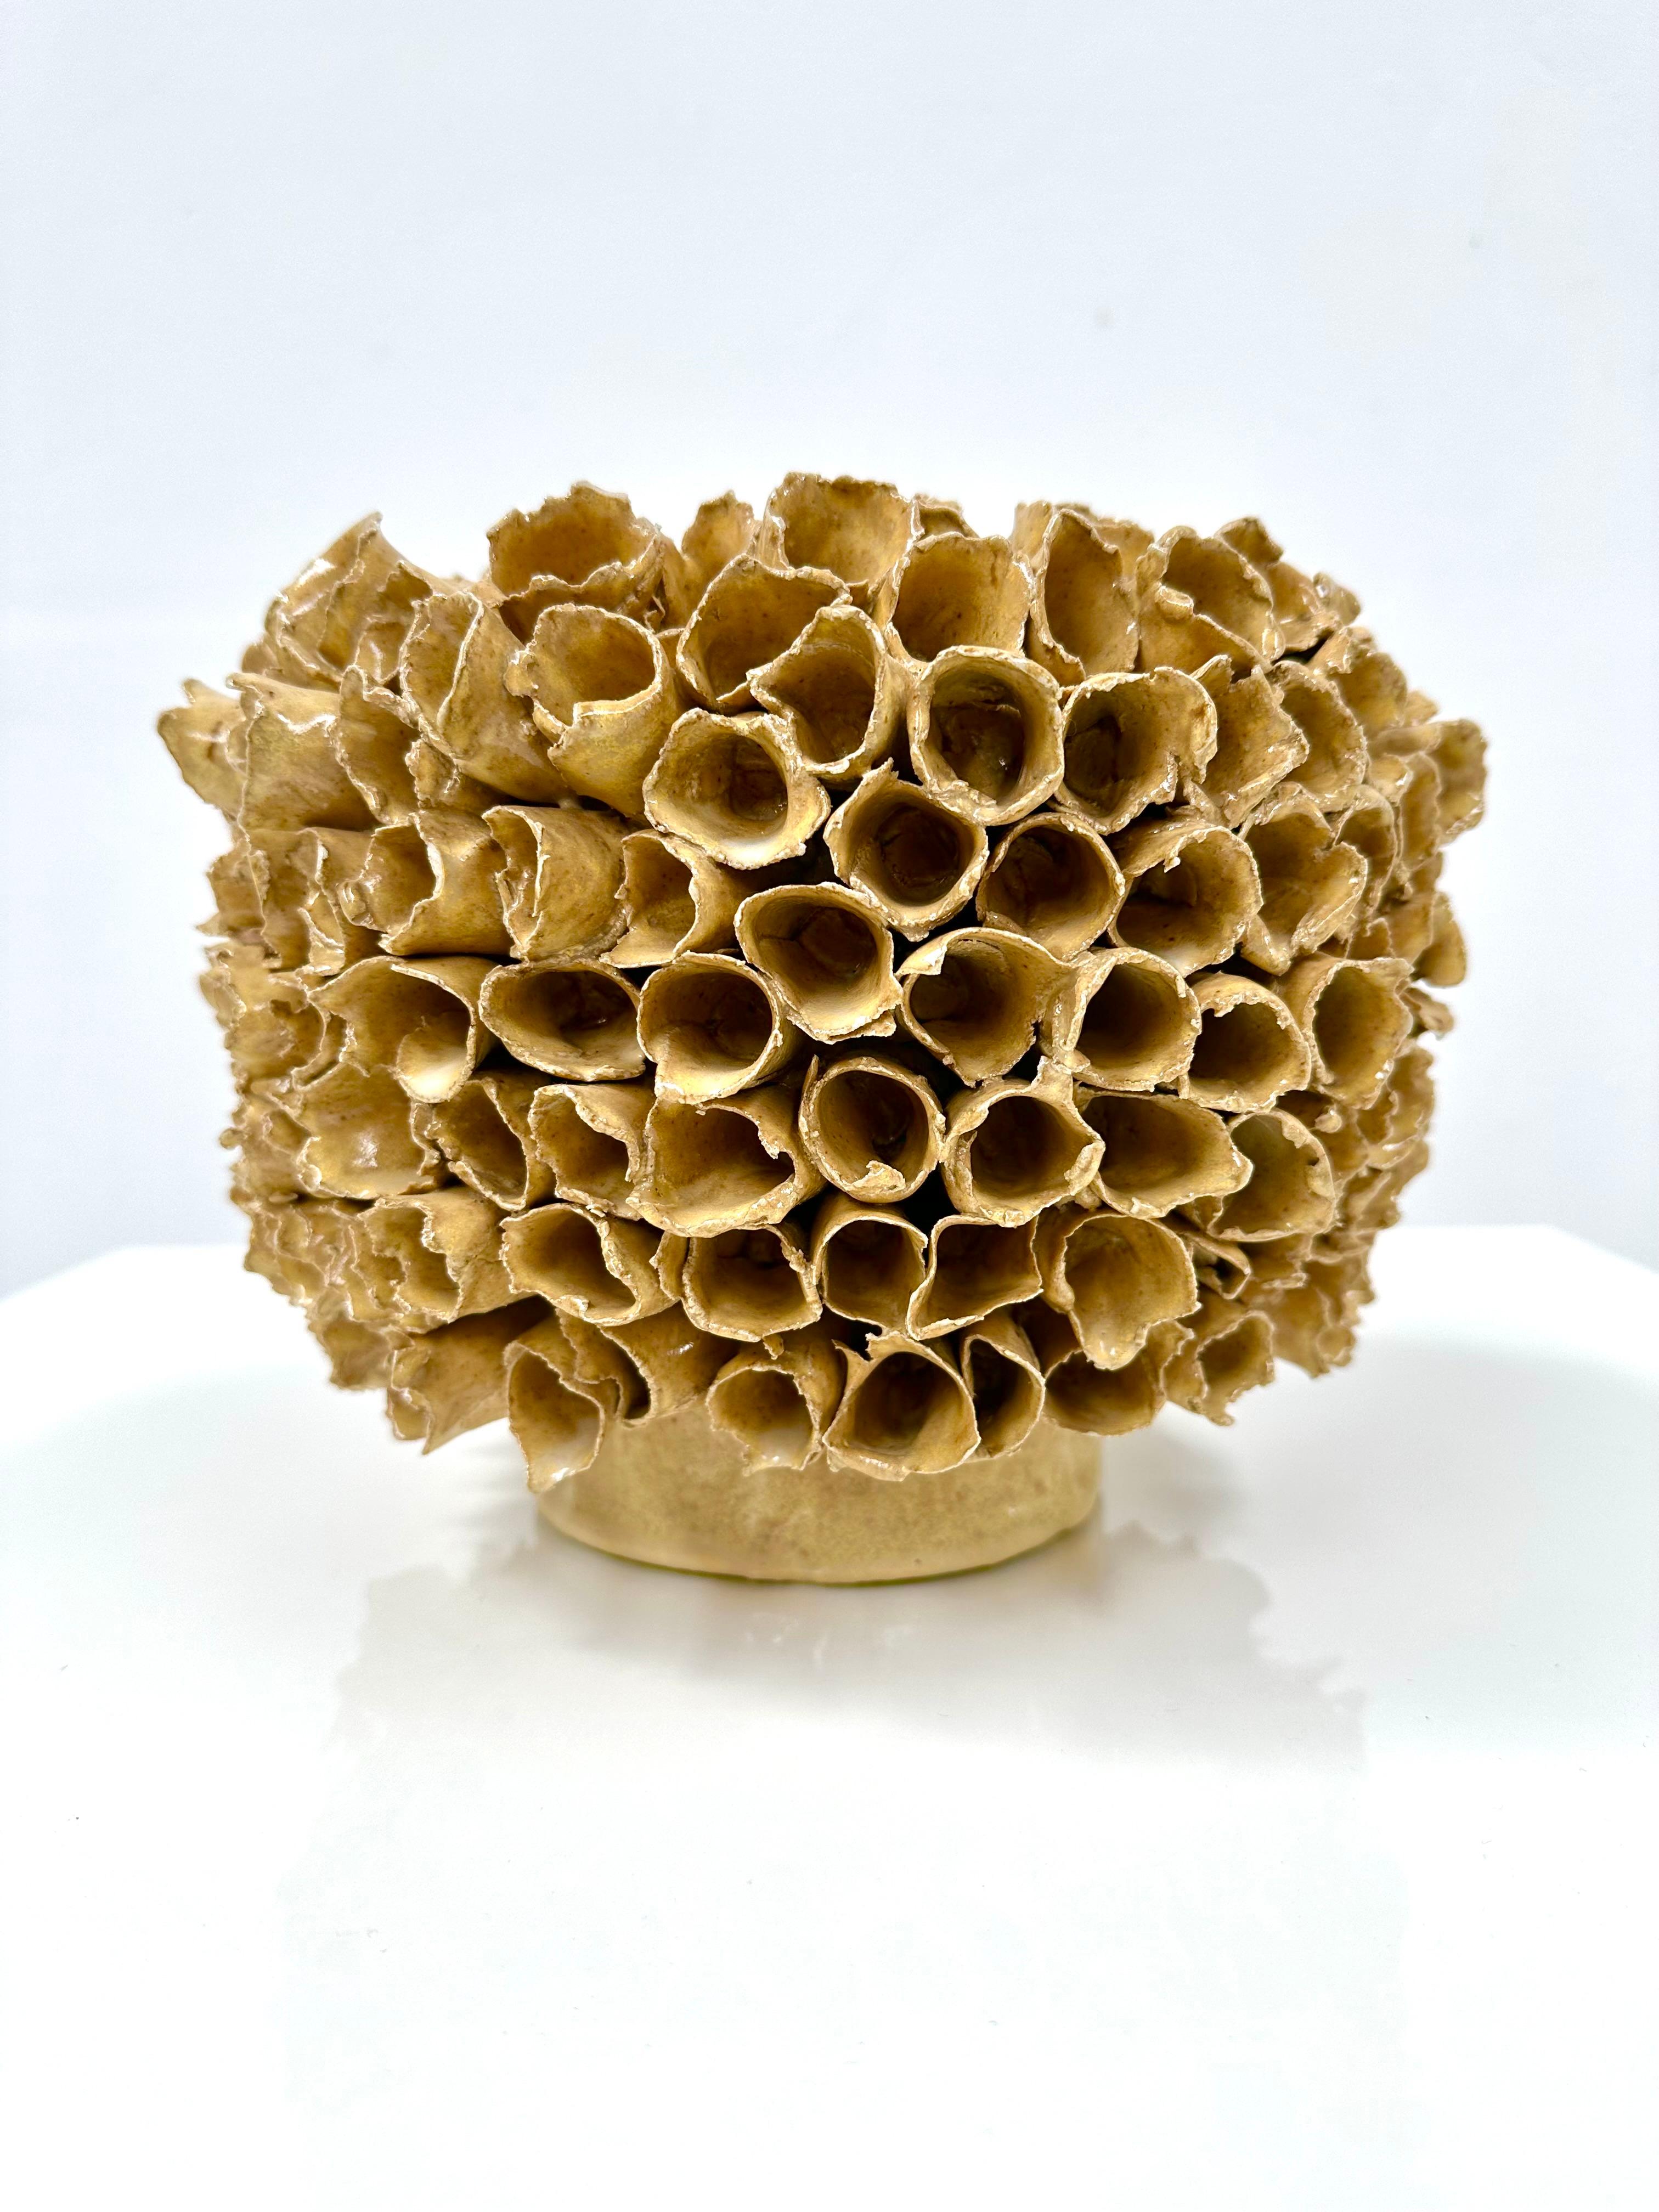 Late 20th Century Dutch Ceramic Handmade Vase “Coral” by Maria Verhaegh, 1997. For Sale